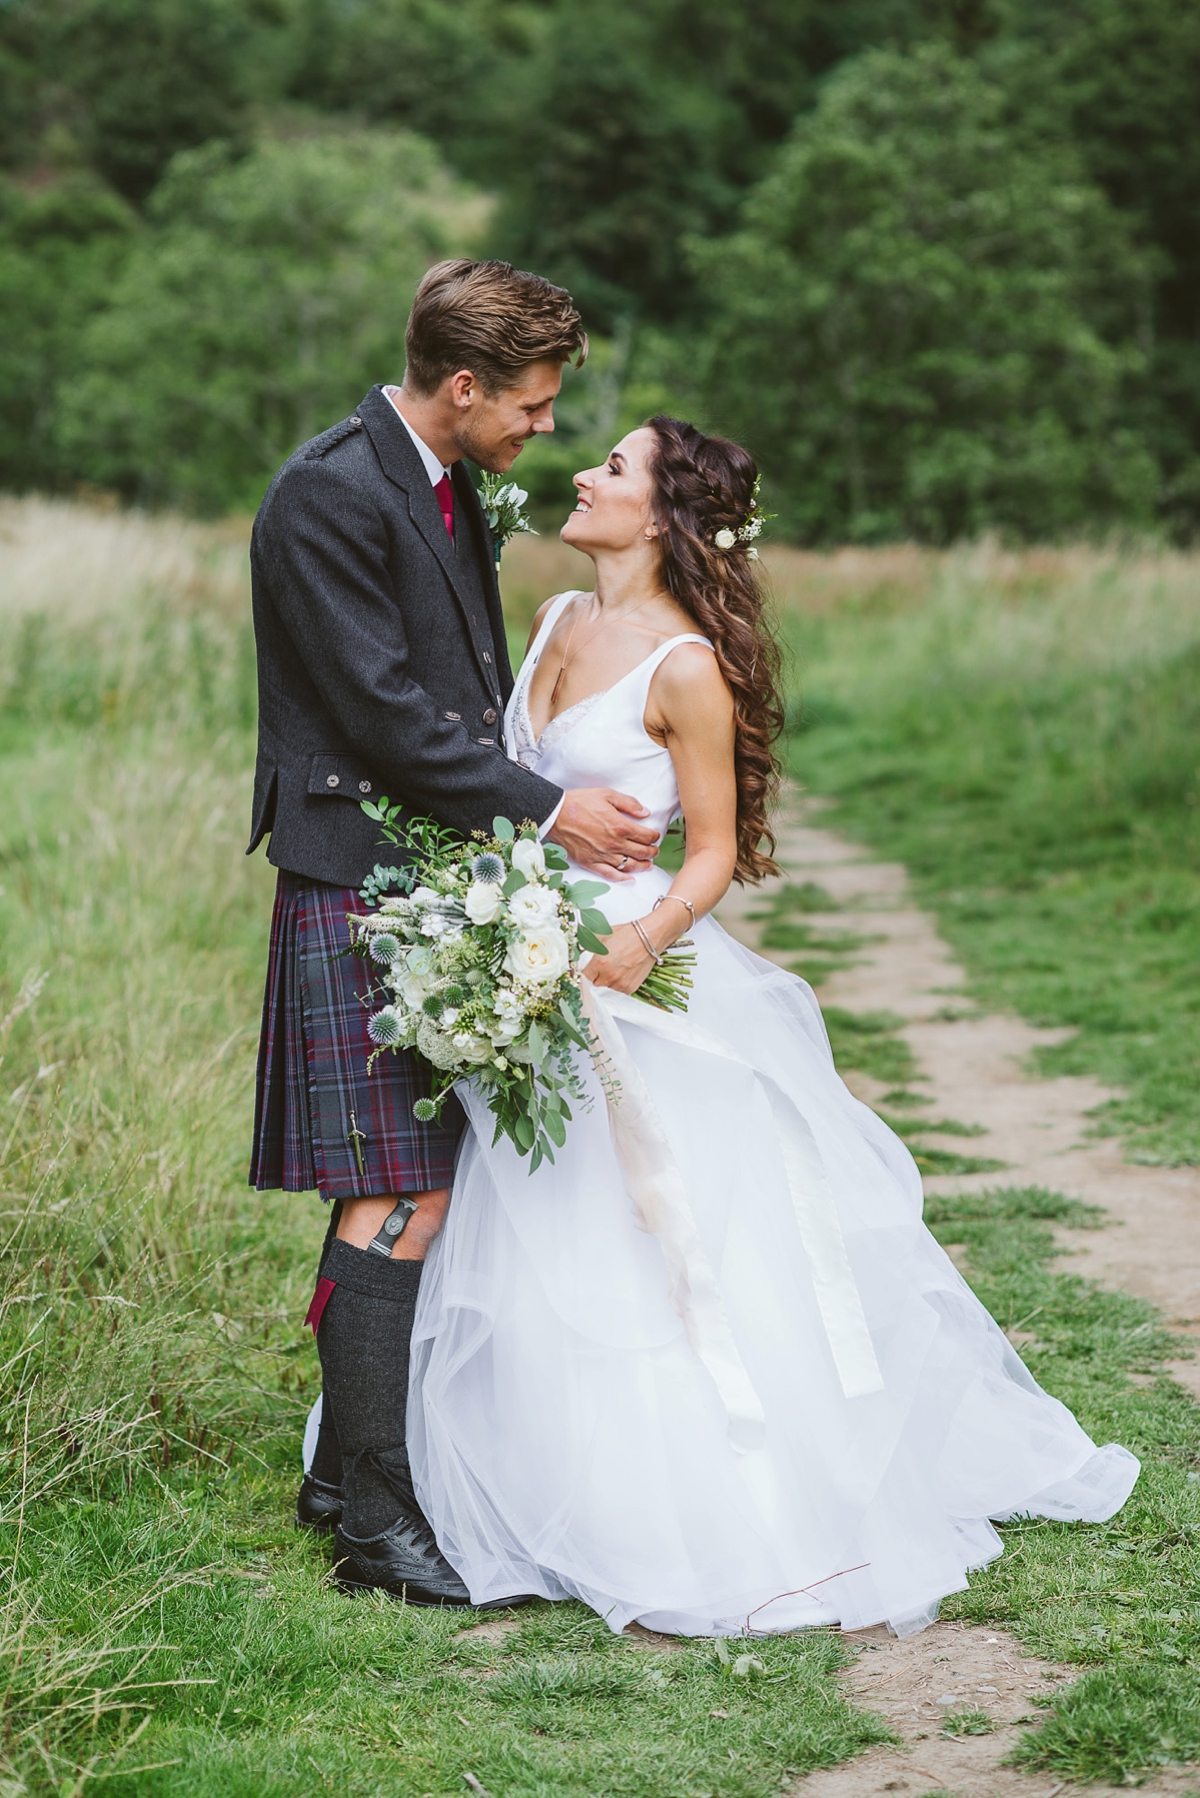 31 Fairytale inspired wedding Scottish Dutch traditions